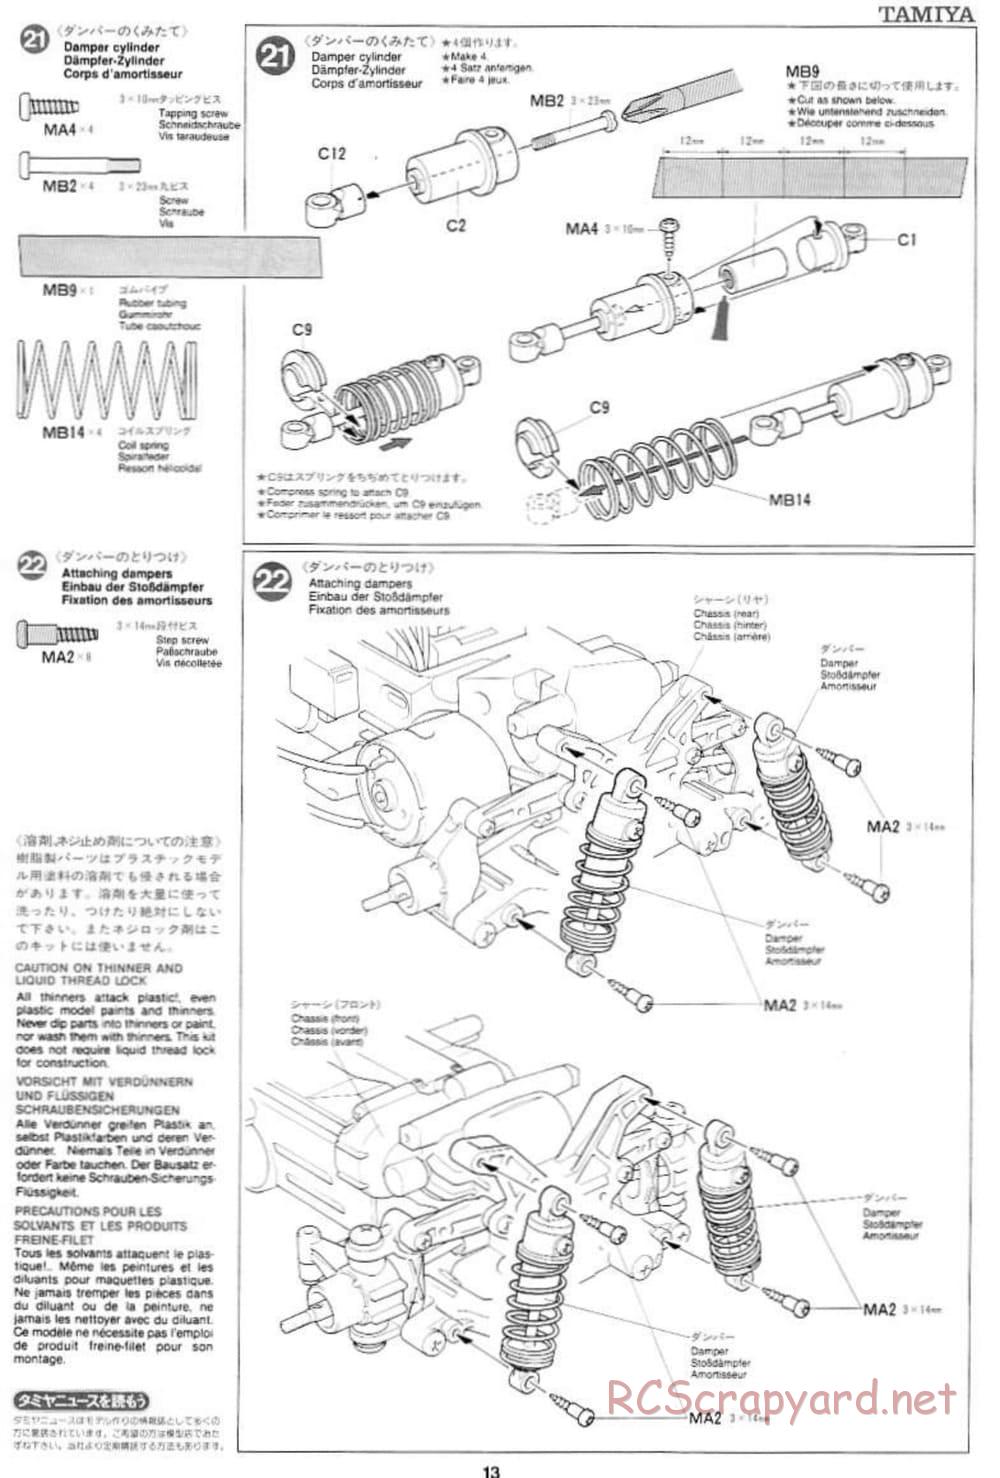 Tamiya - Ford Escort WRC - TL-01 Chassis - Manual - Page 13